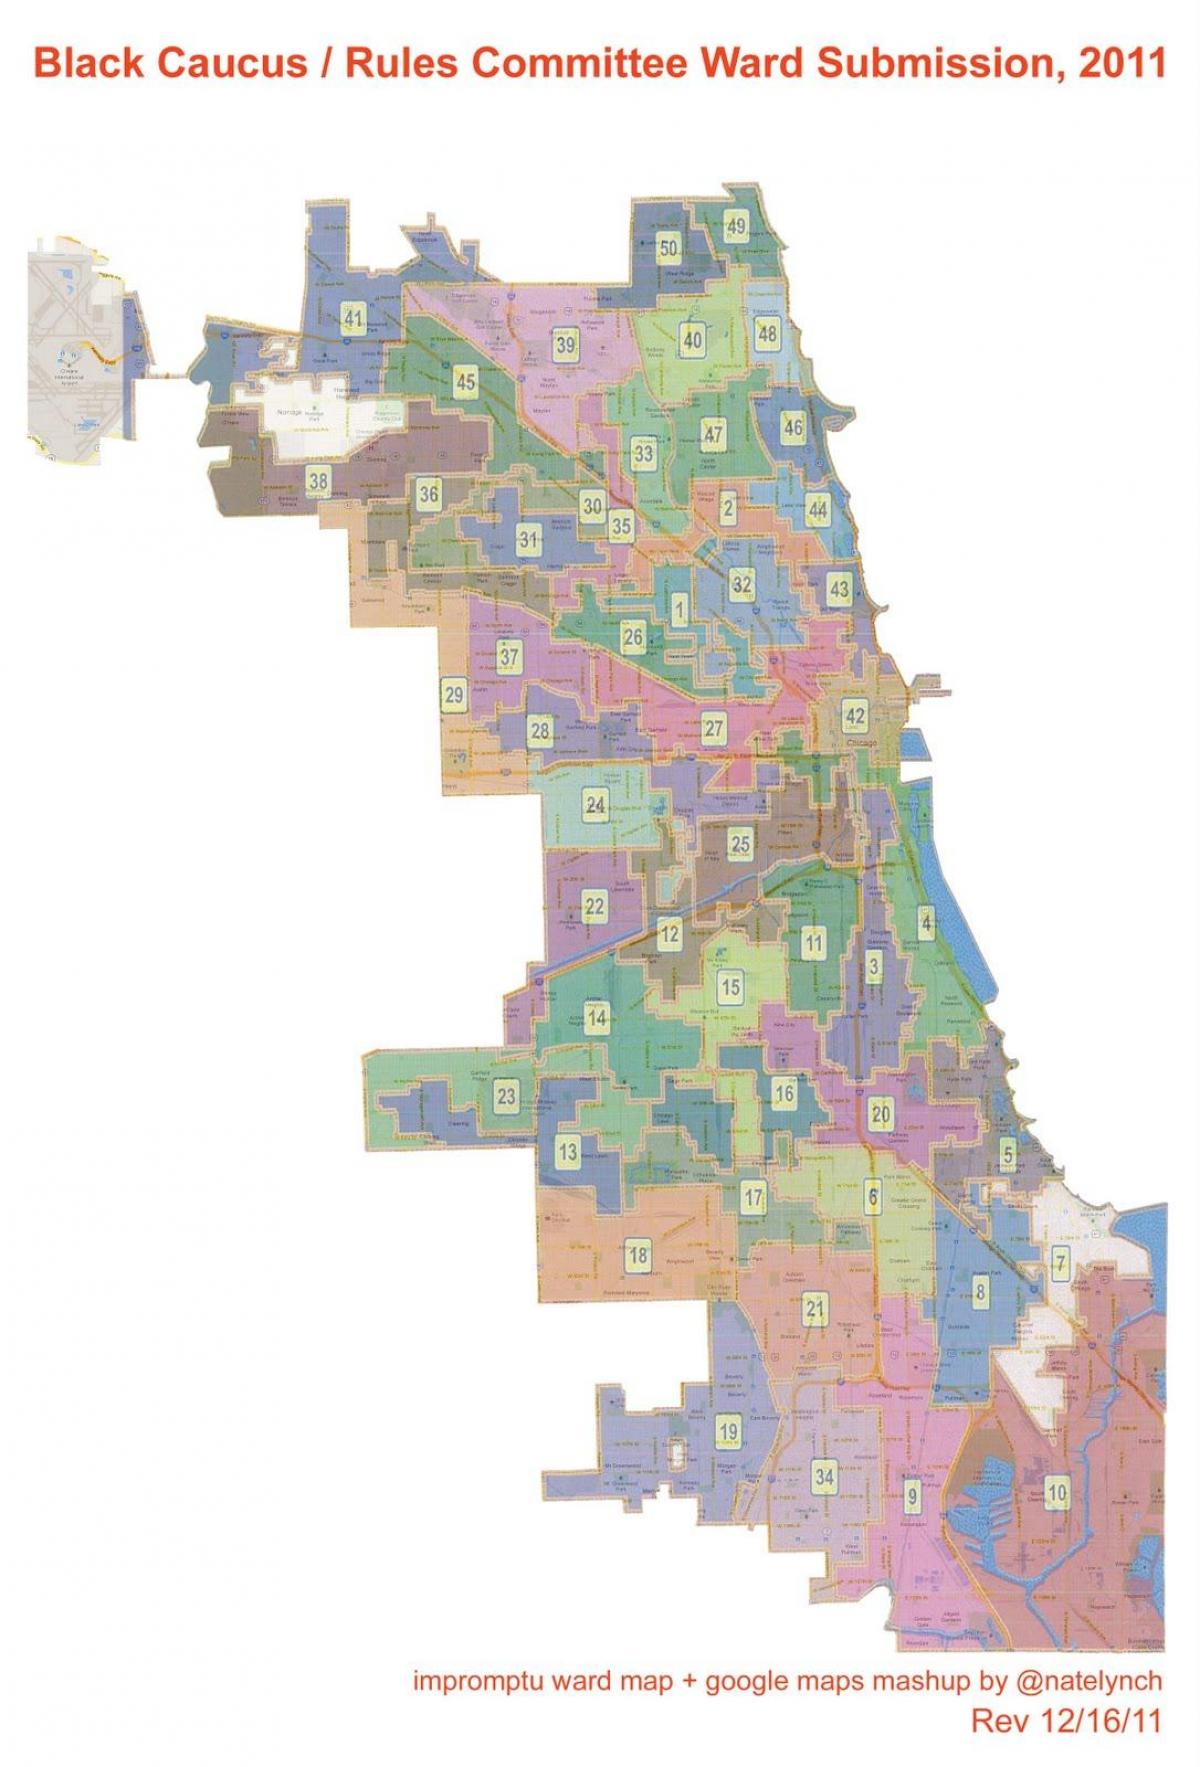 Chicagu ward zemljevid